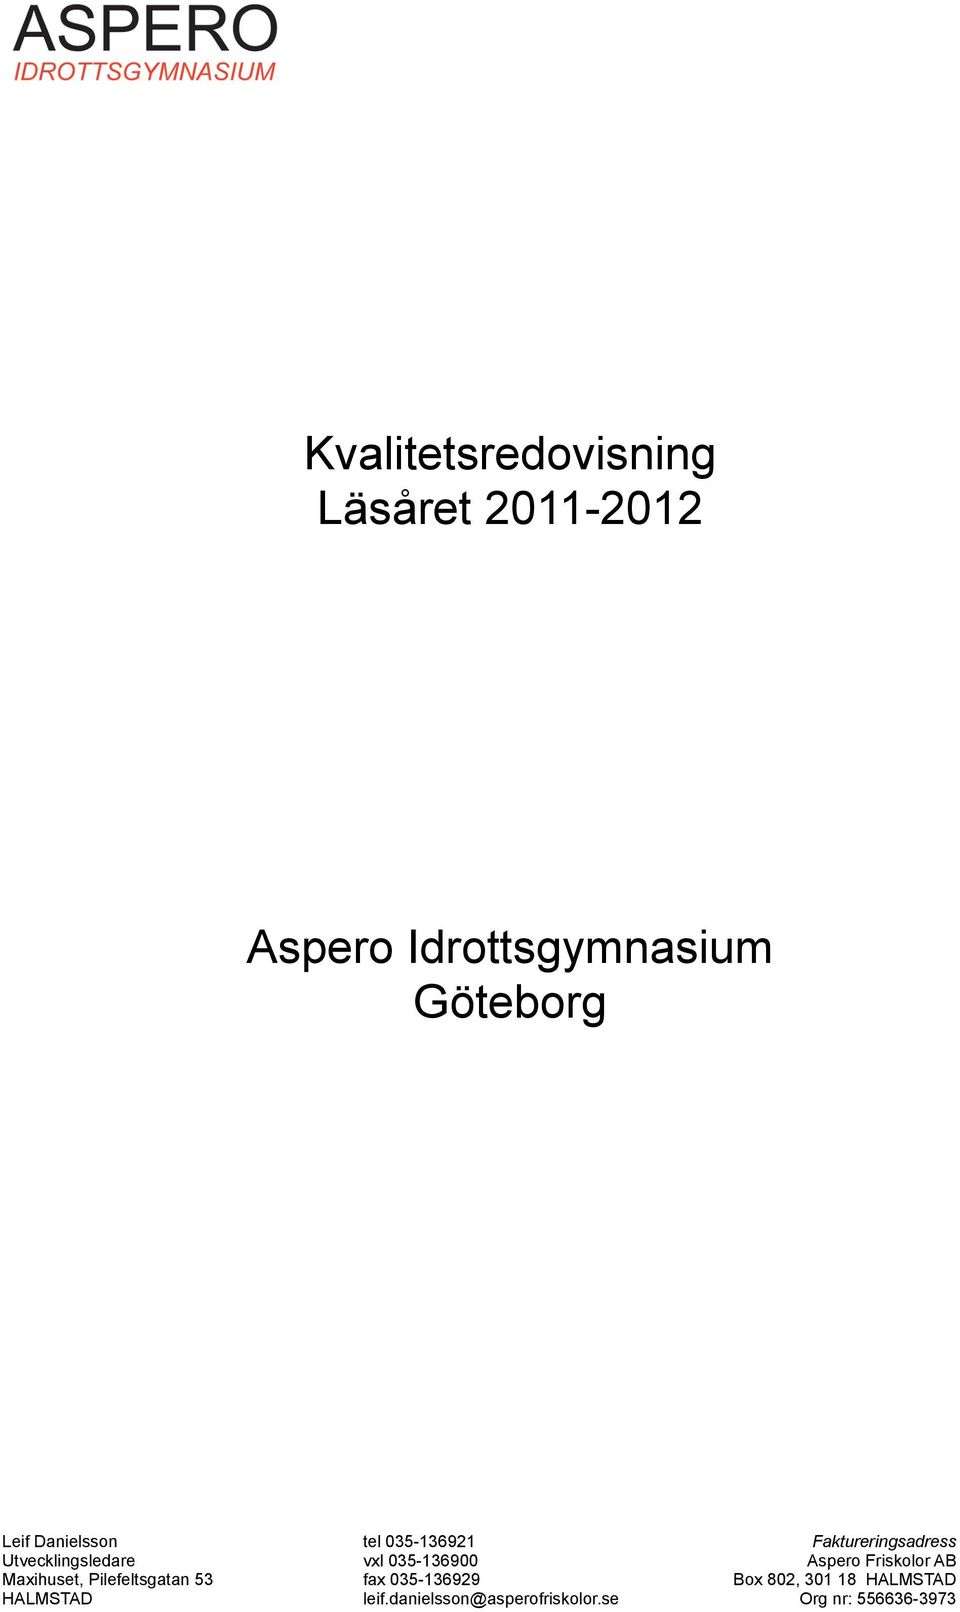 Aspero Idrottsgymnasium